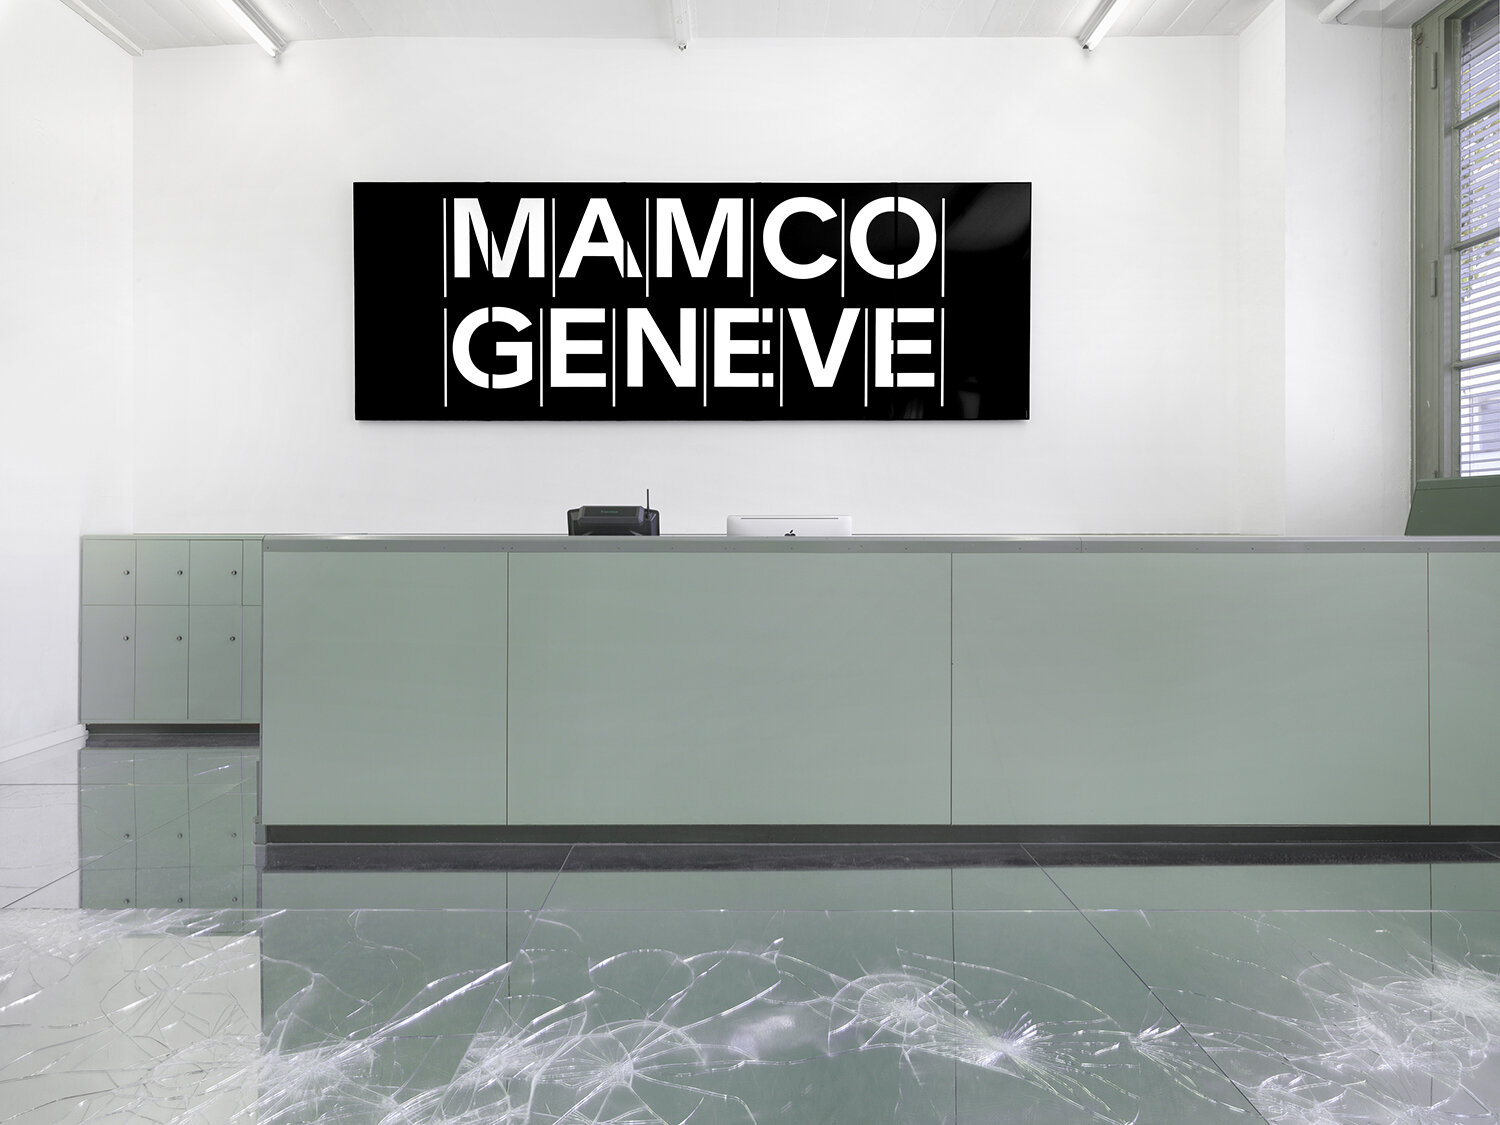   Untitled (Musée d'Art moderne et contemporain, Geneva, Switzerland, 29 mai–8 septembre, 2019)    2019   Laminated mirror and glass, neoprene  Dimensions variable   Musée d'art moderne et contemporain, 2019    